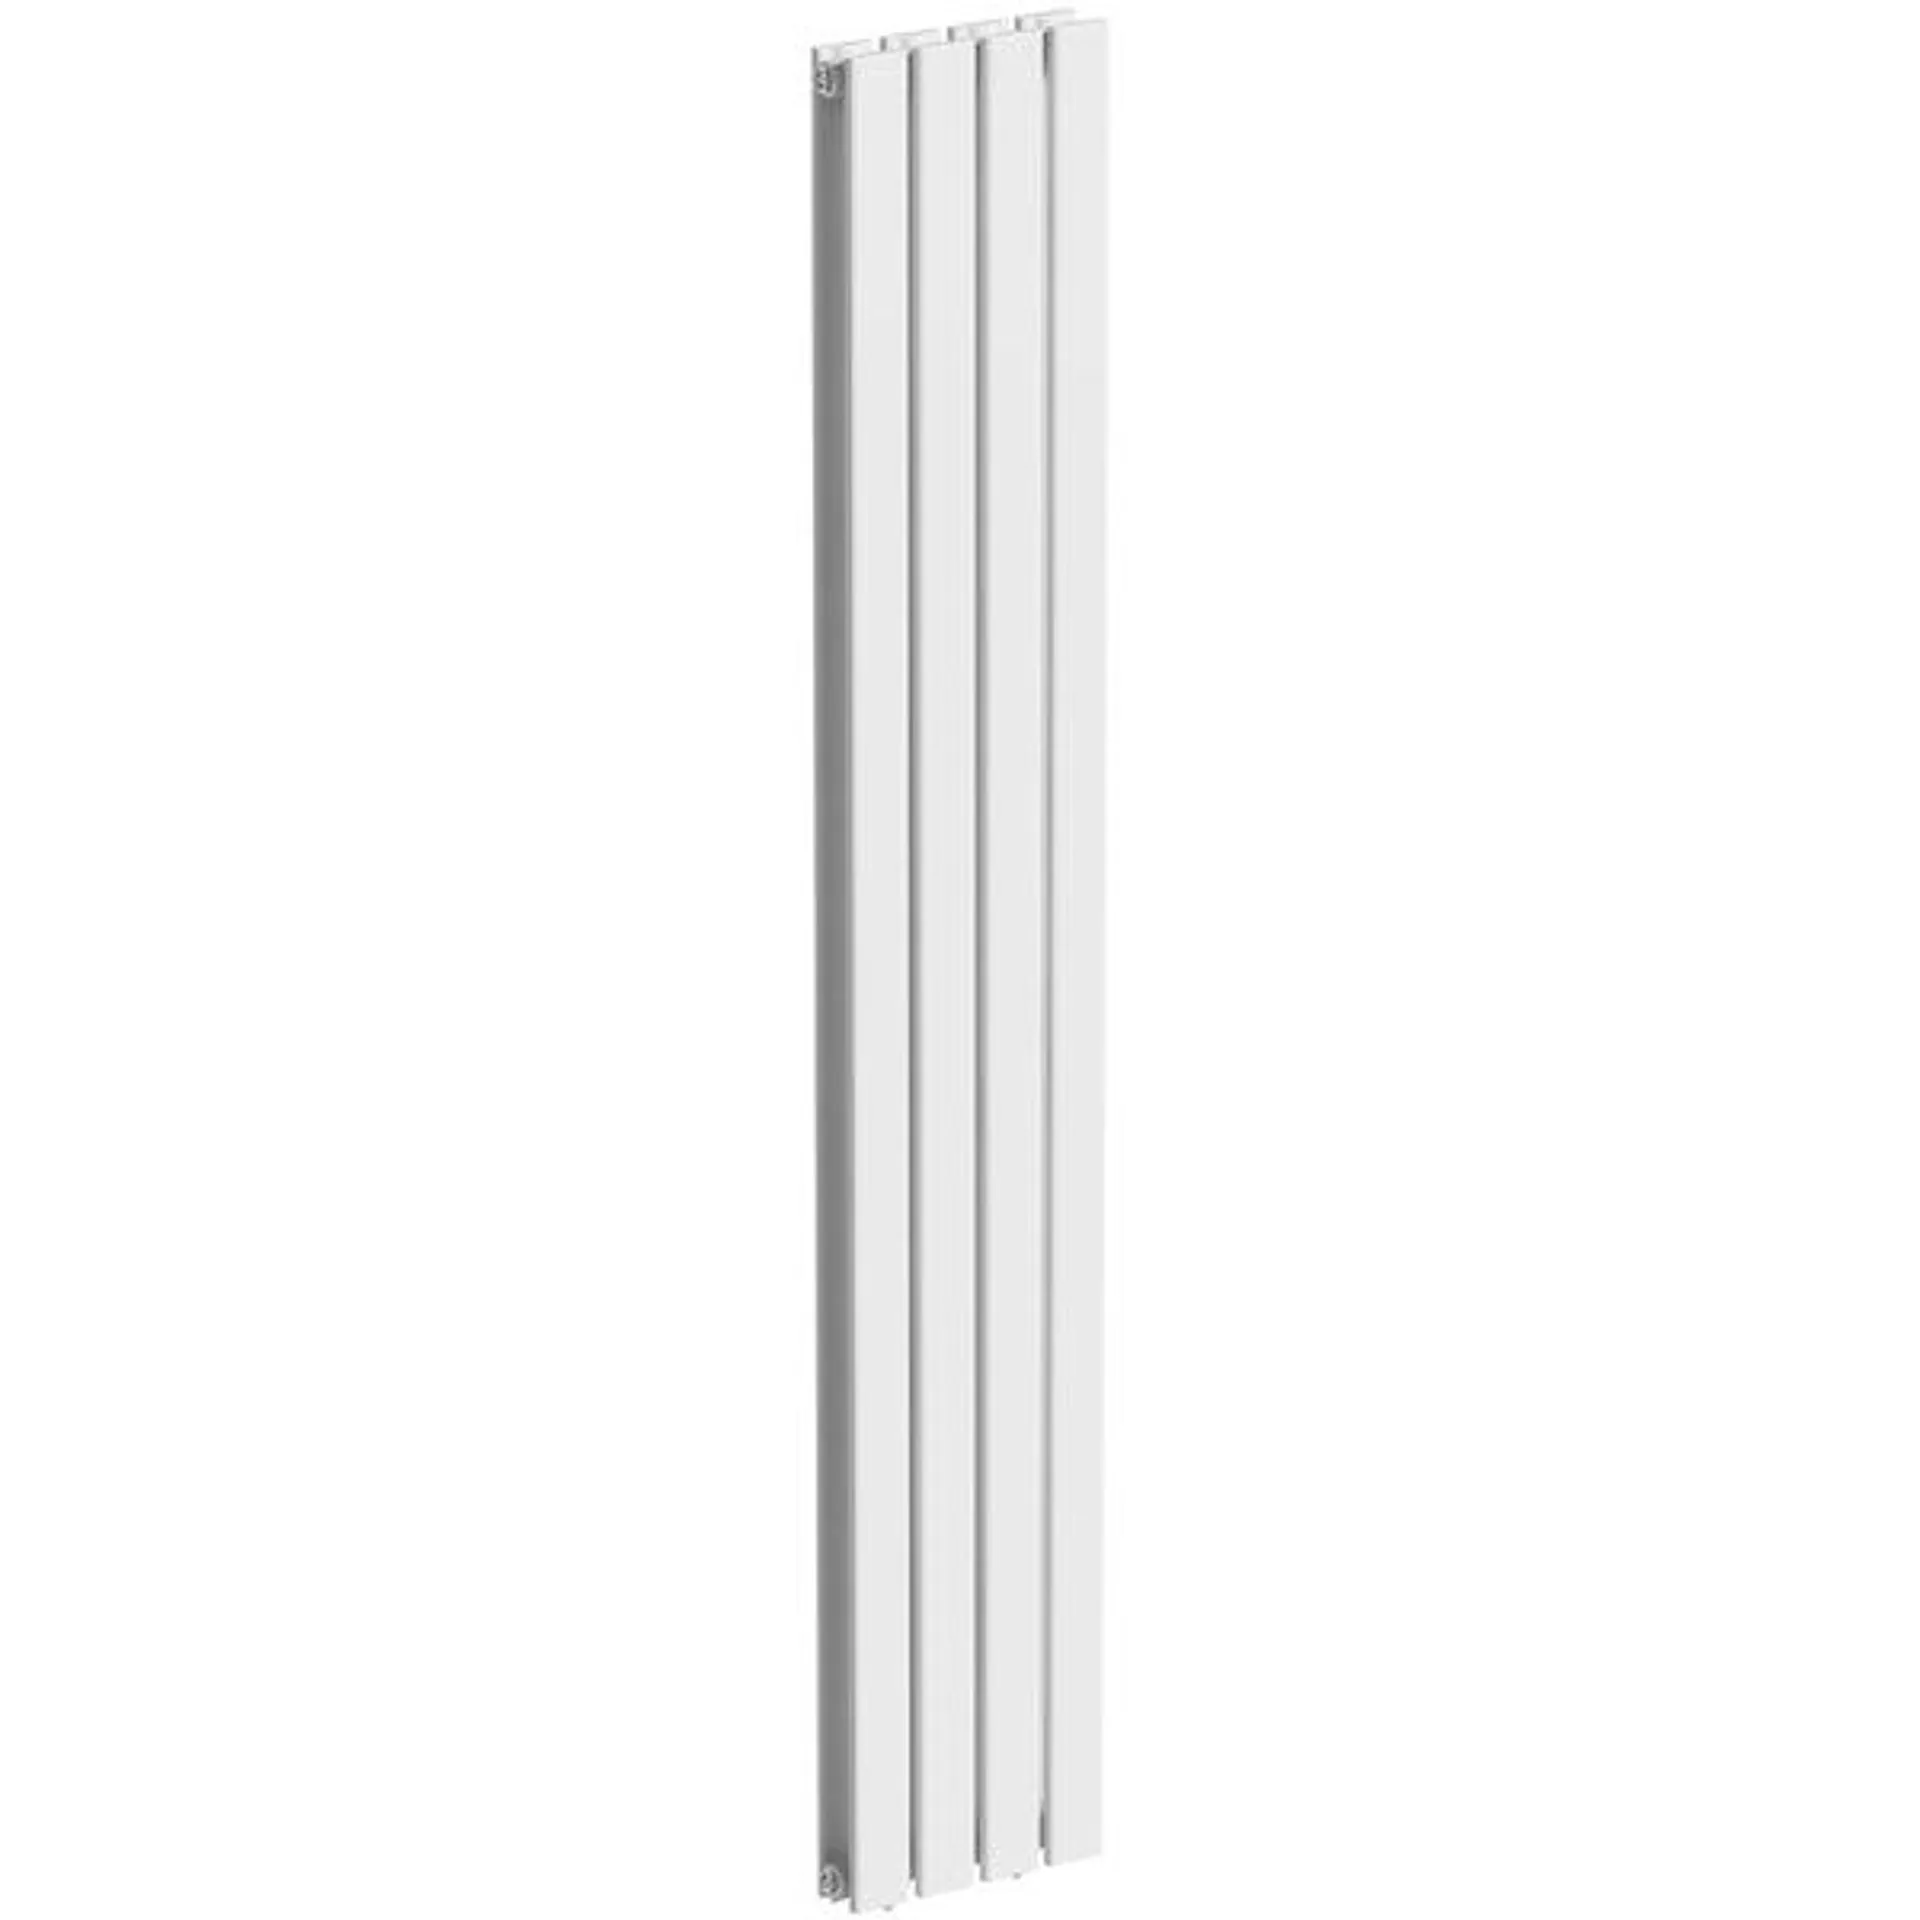 The Heating Co. Bonaire white double vertical flat panel radiator